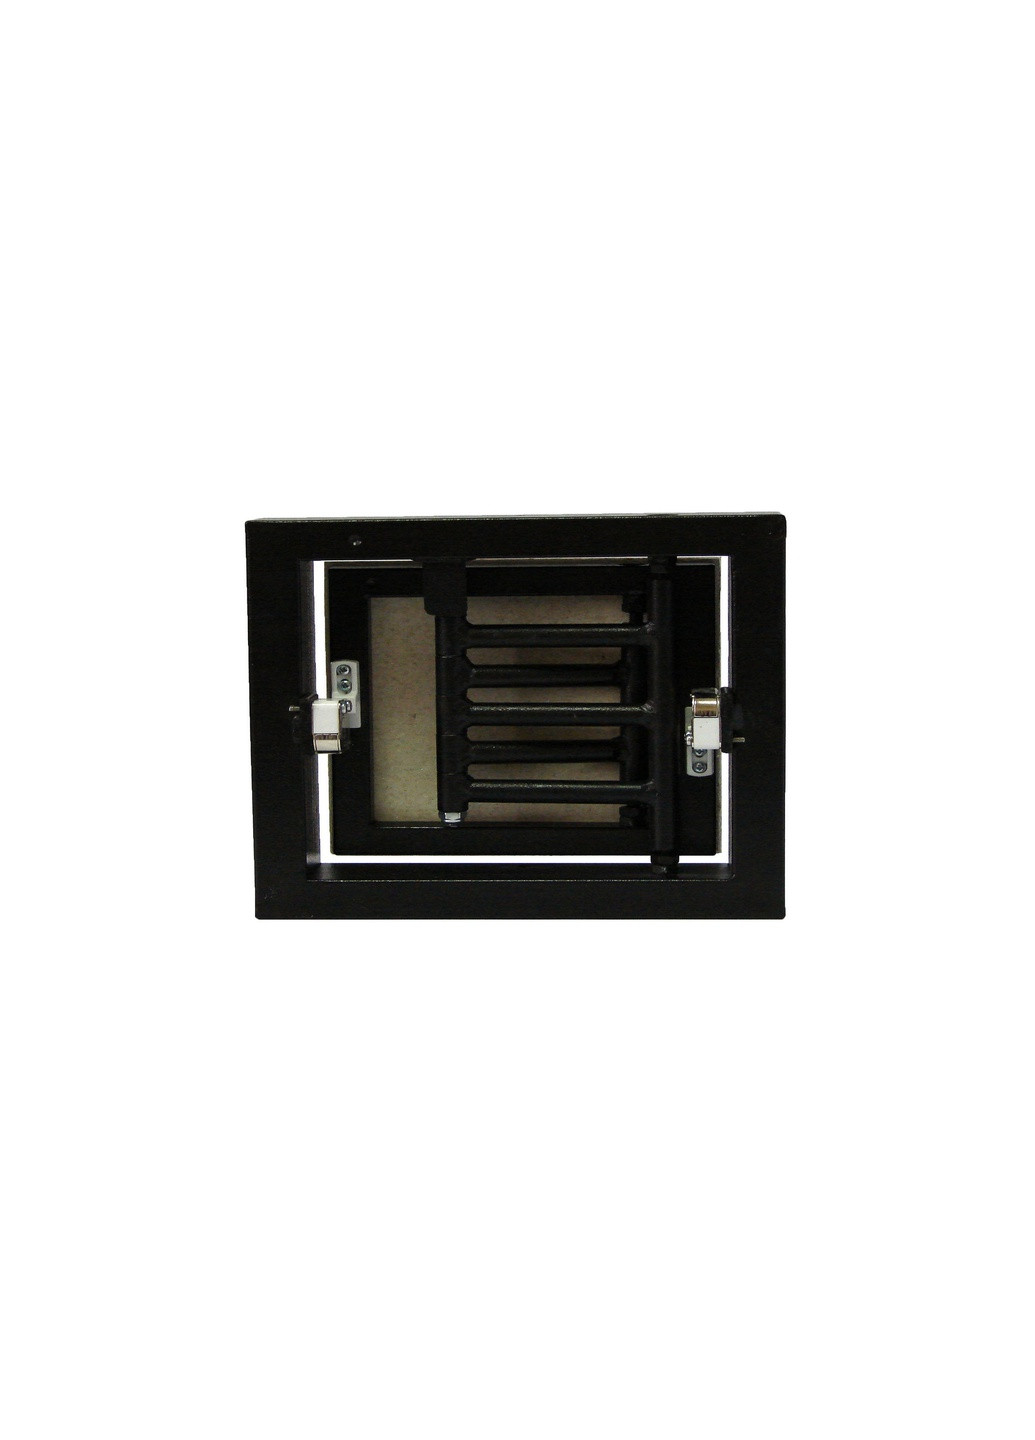 Ревизионный люк скрытого монтажа под плитку нажимного типа 350x200 ревизионная дверца для плитки (1135) S-Dom (264209625)